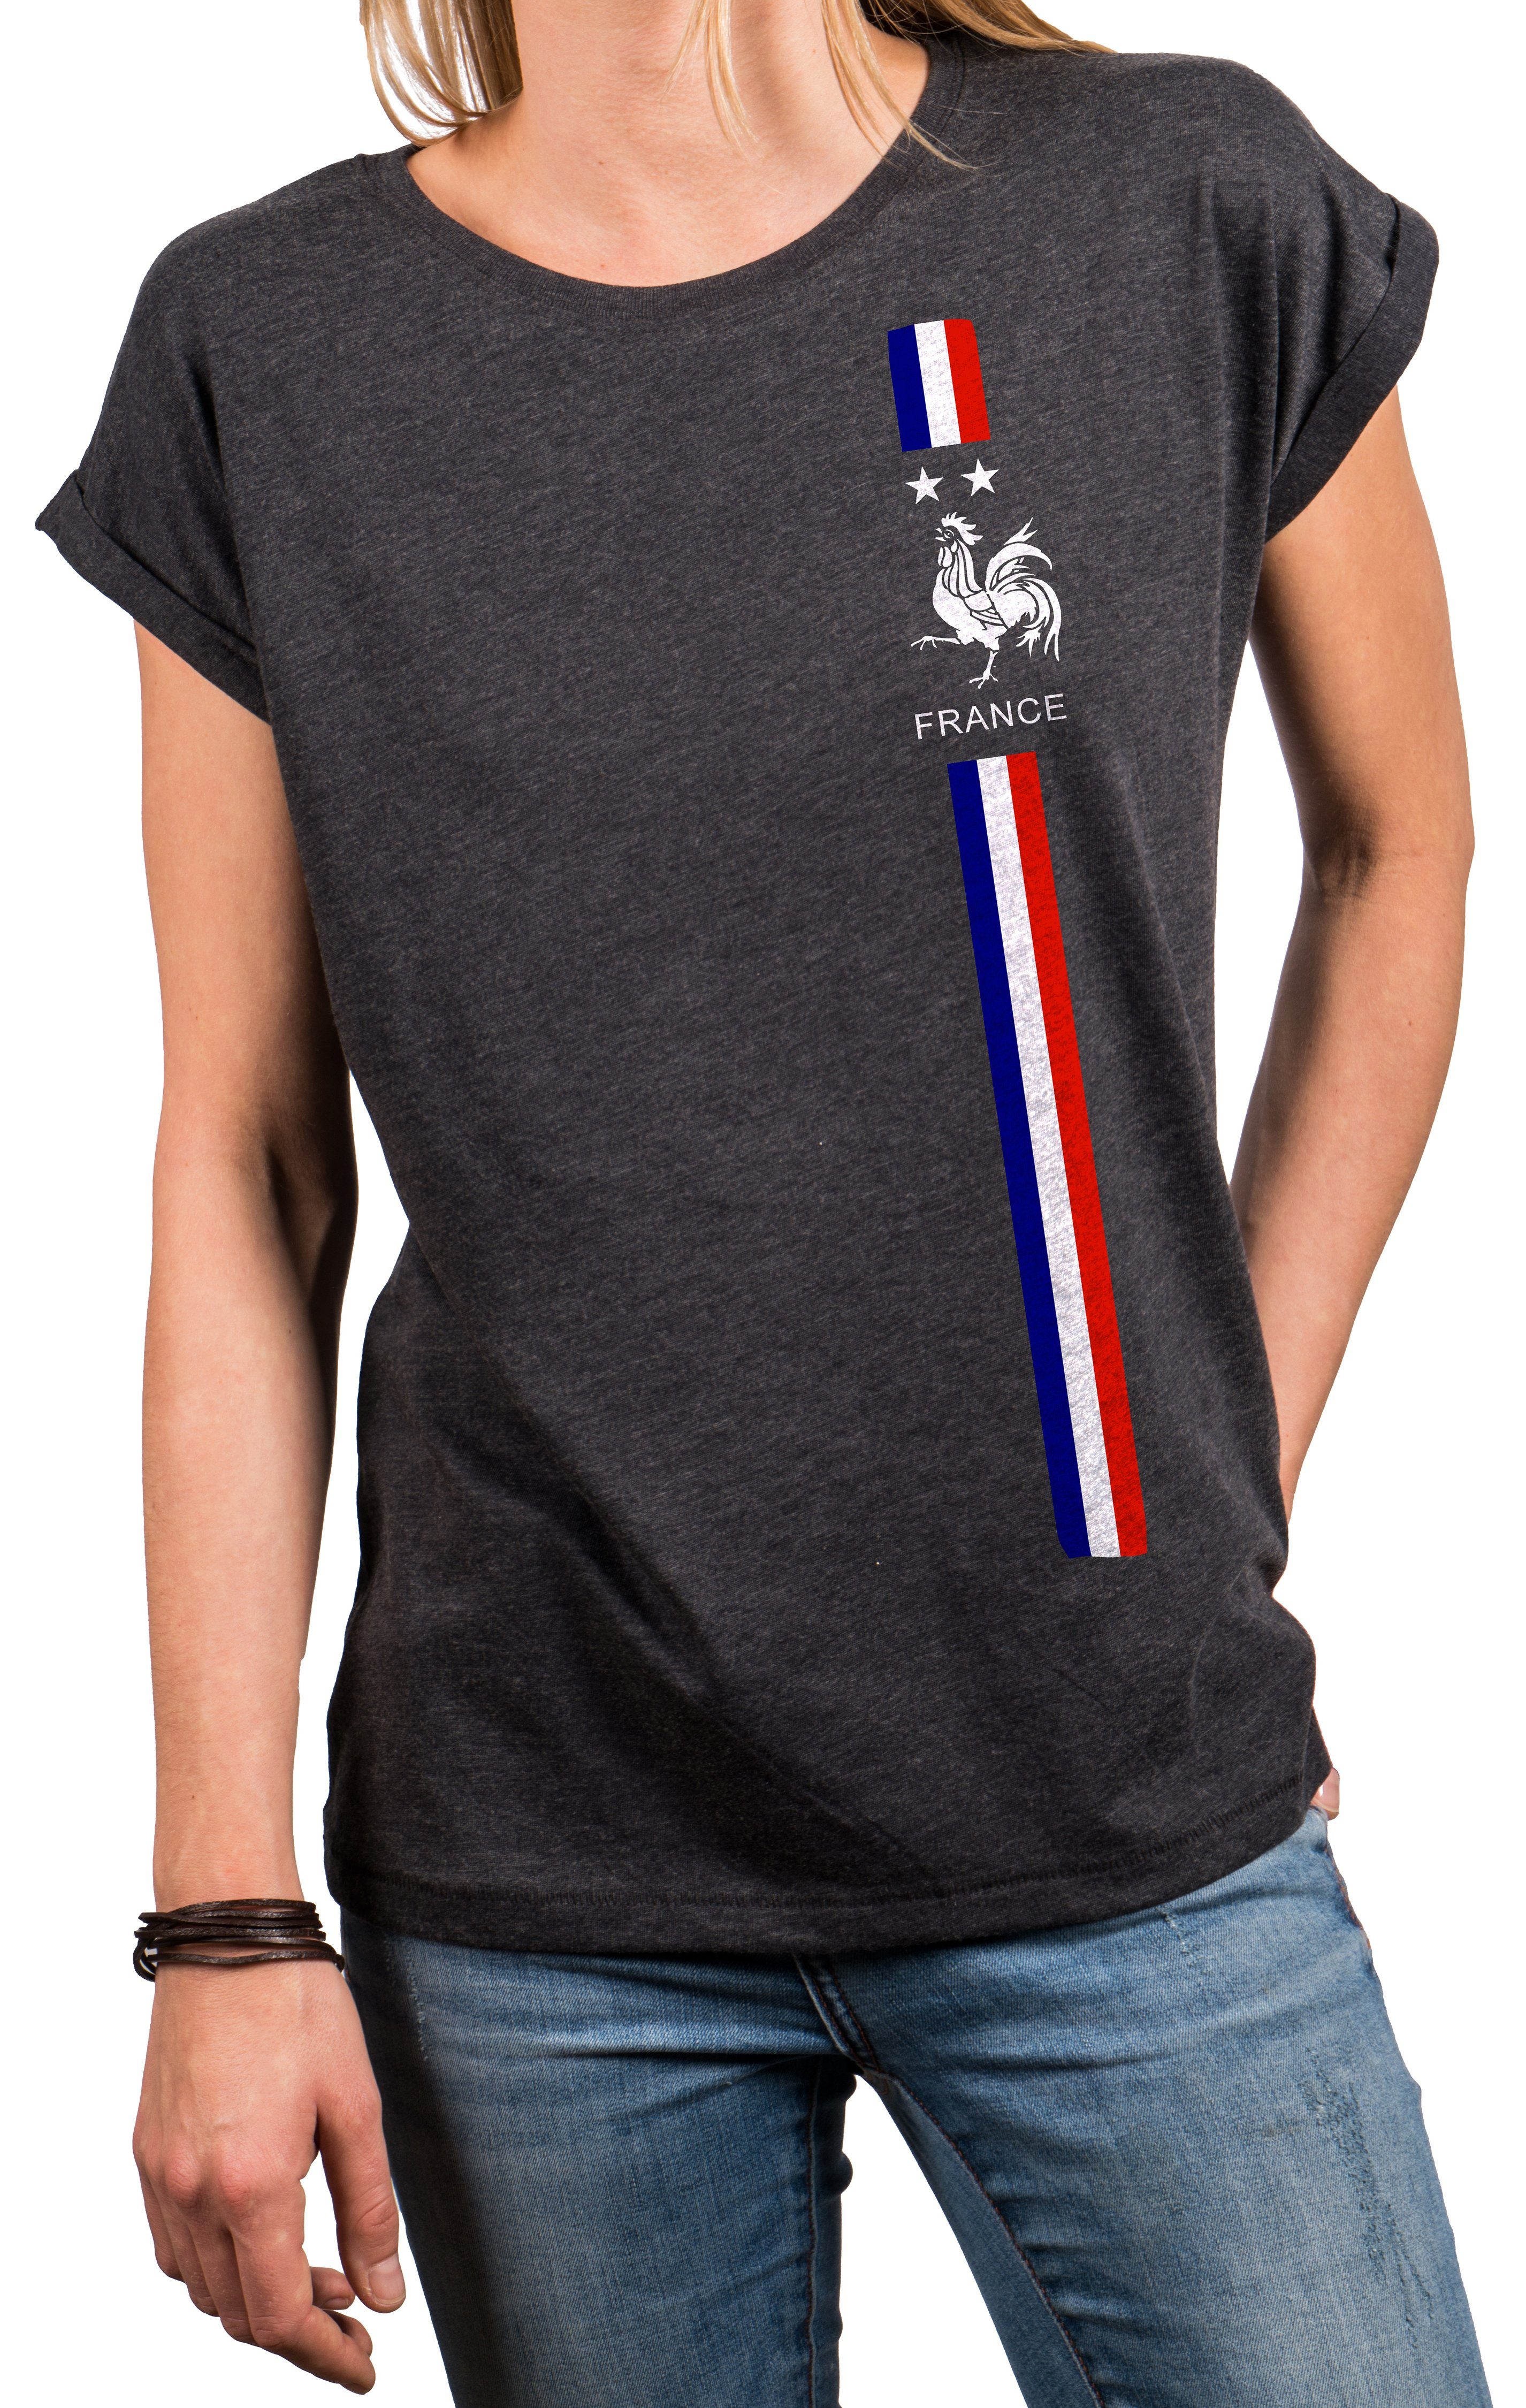 MAKAYA Print-Shirt Damen Kurzarmshirt Baumwolle Frankreich Fahne Flagge Trikot Top Tunika, große Größen Grau | T-Shirts